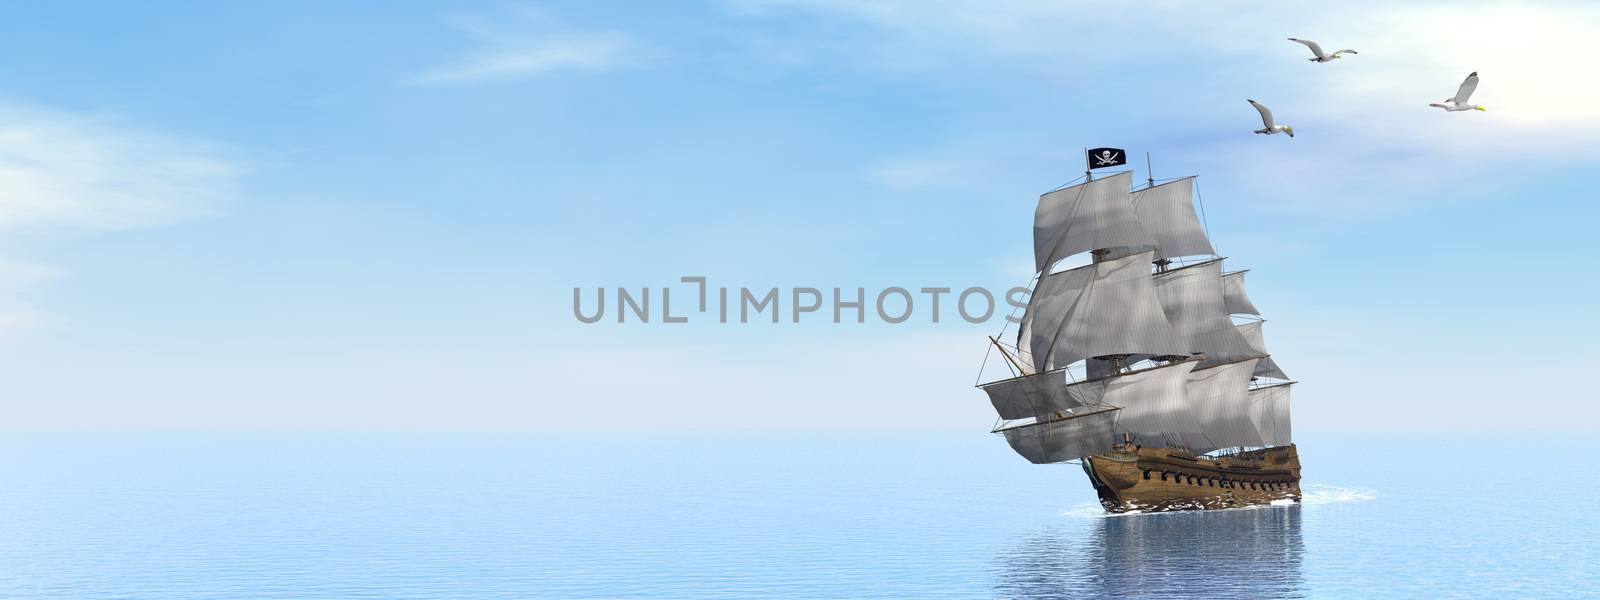 Pirate Ship - 3D render by Elenaphotos21